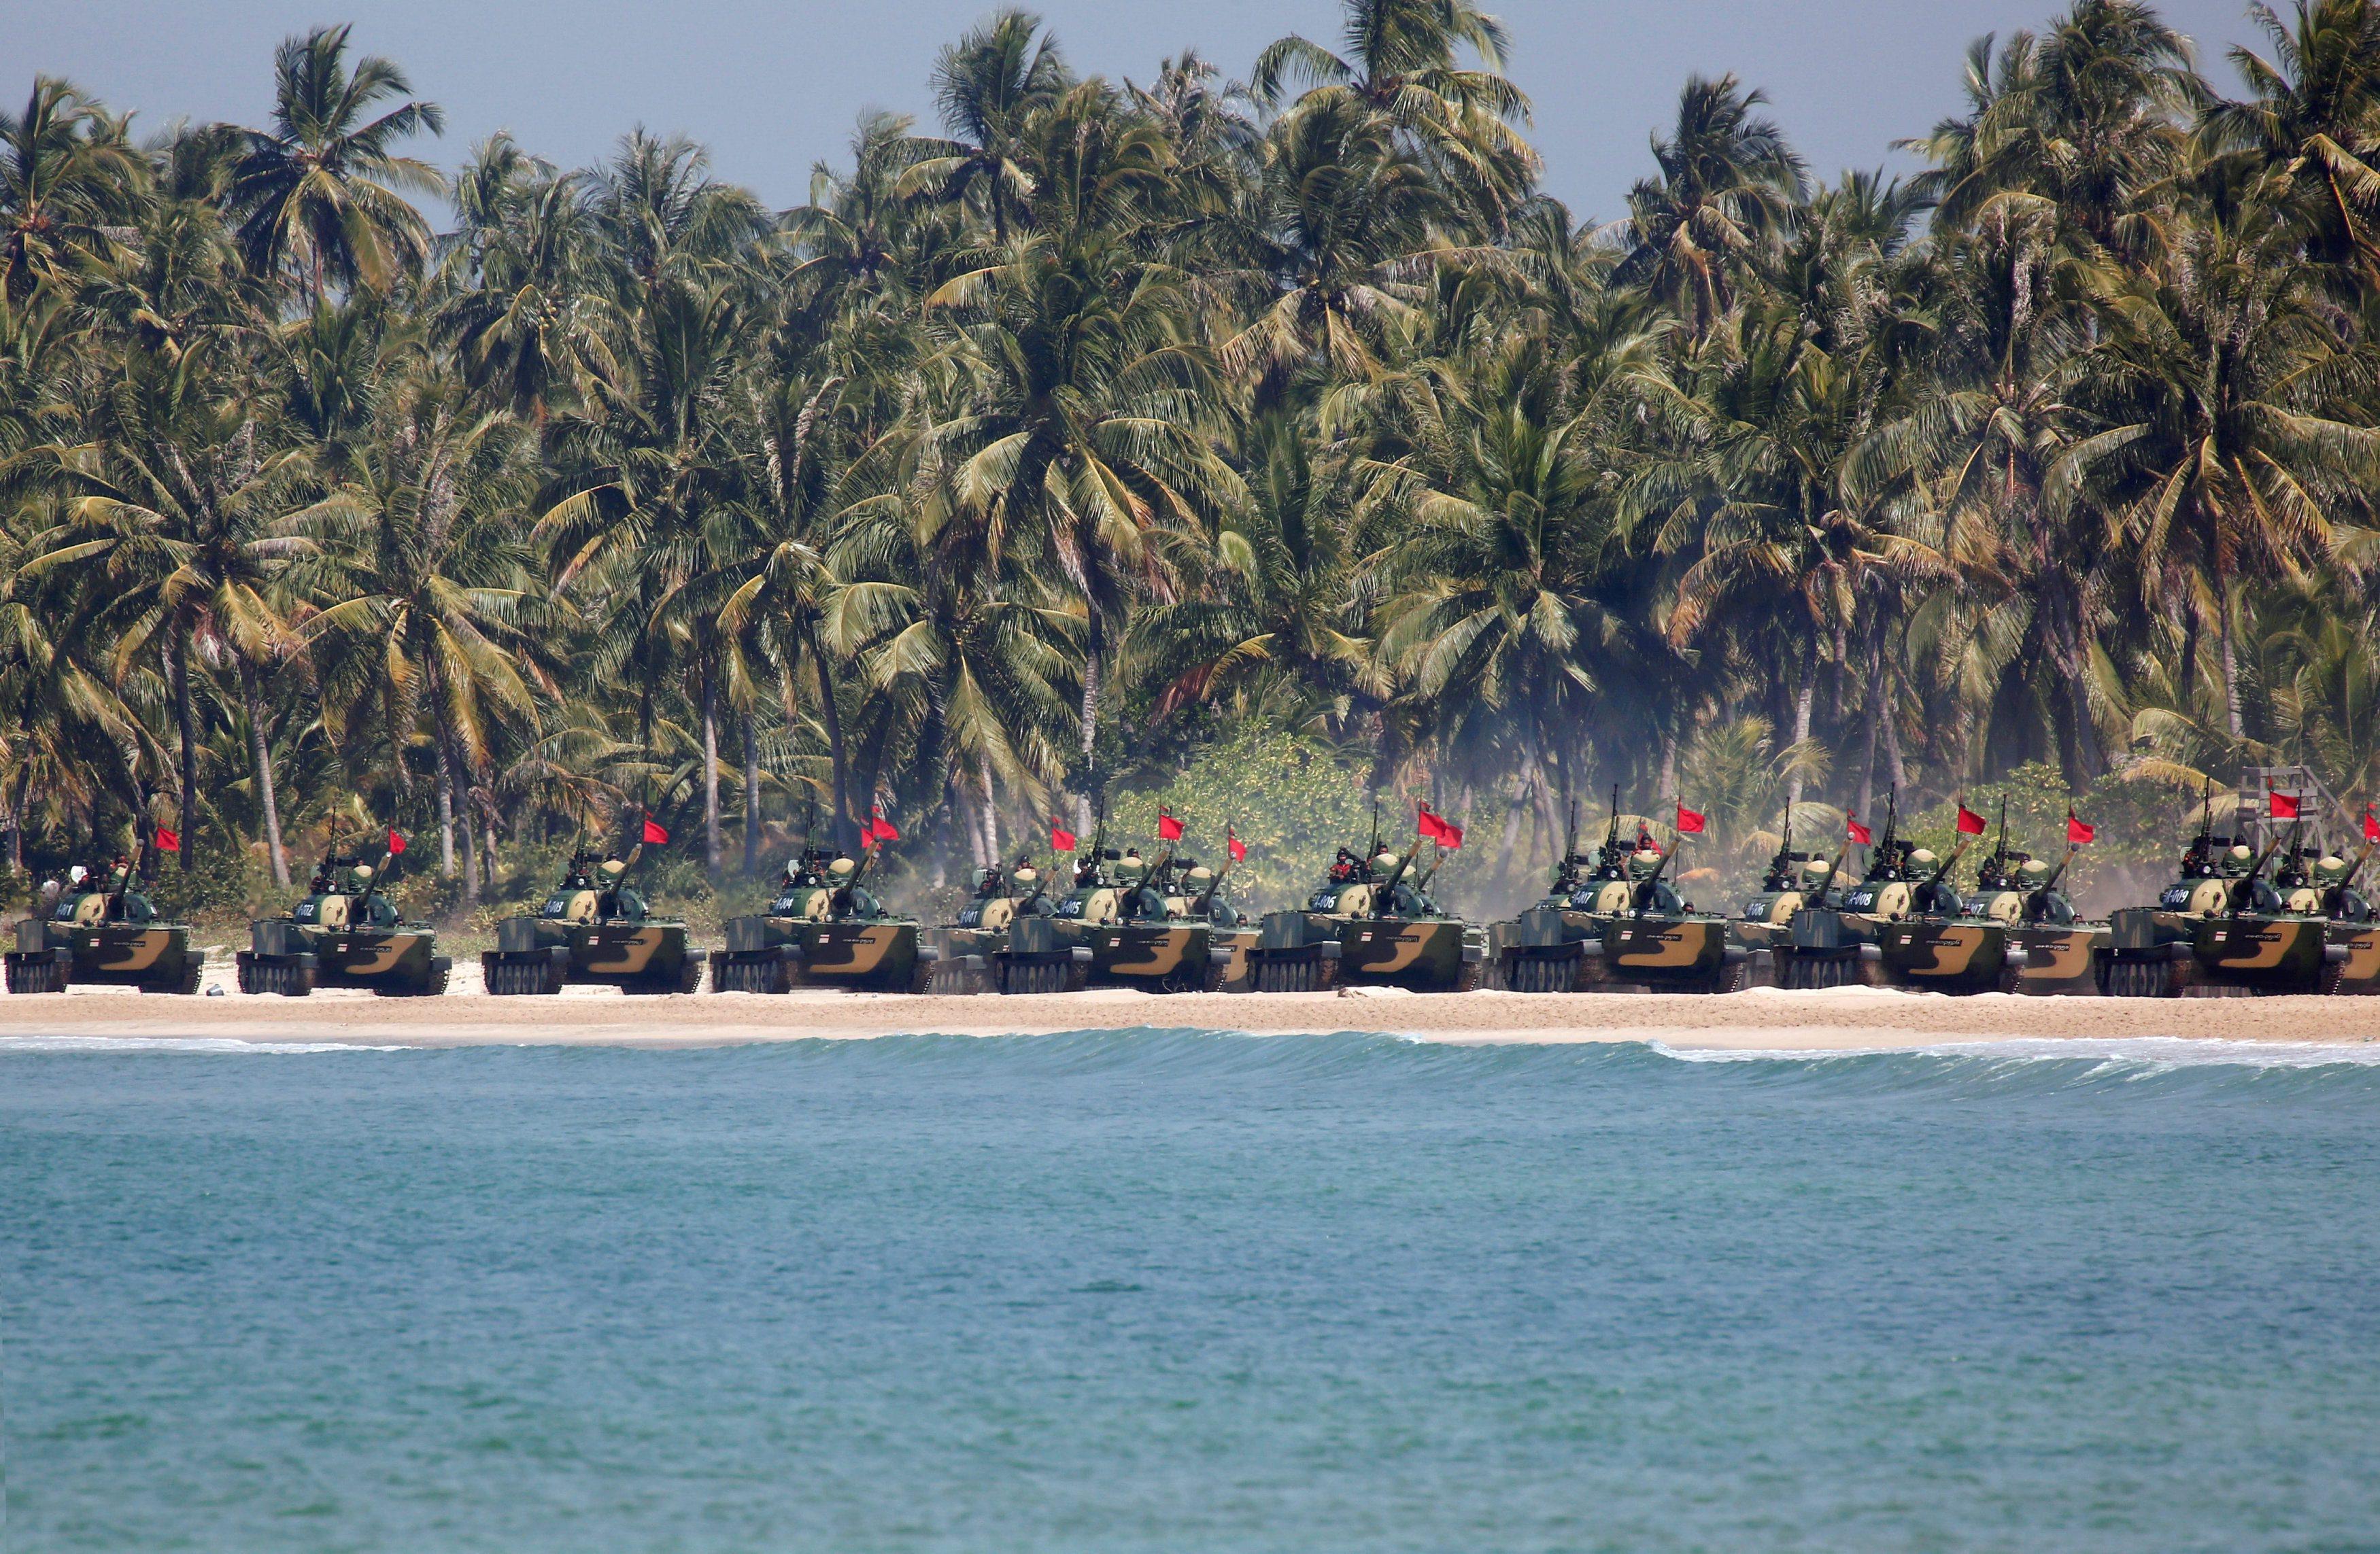 Myanmar military troops take part in a military exercise at Ayeyarwaddy delta region in Myanmar